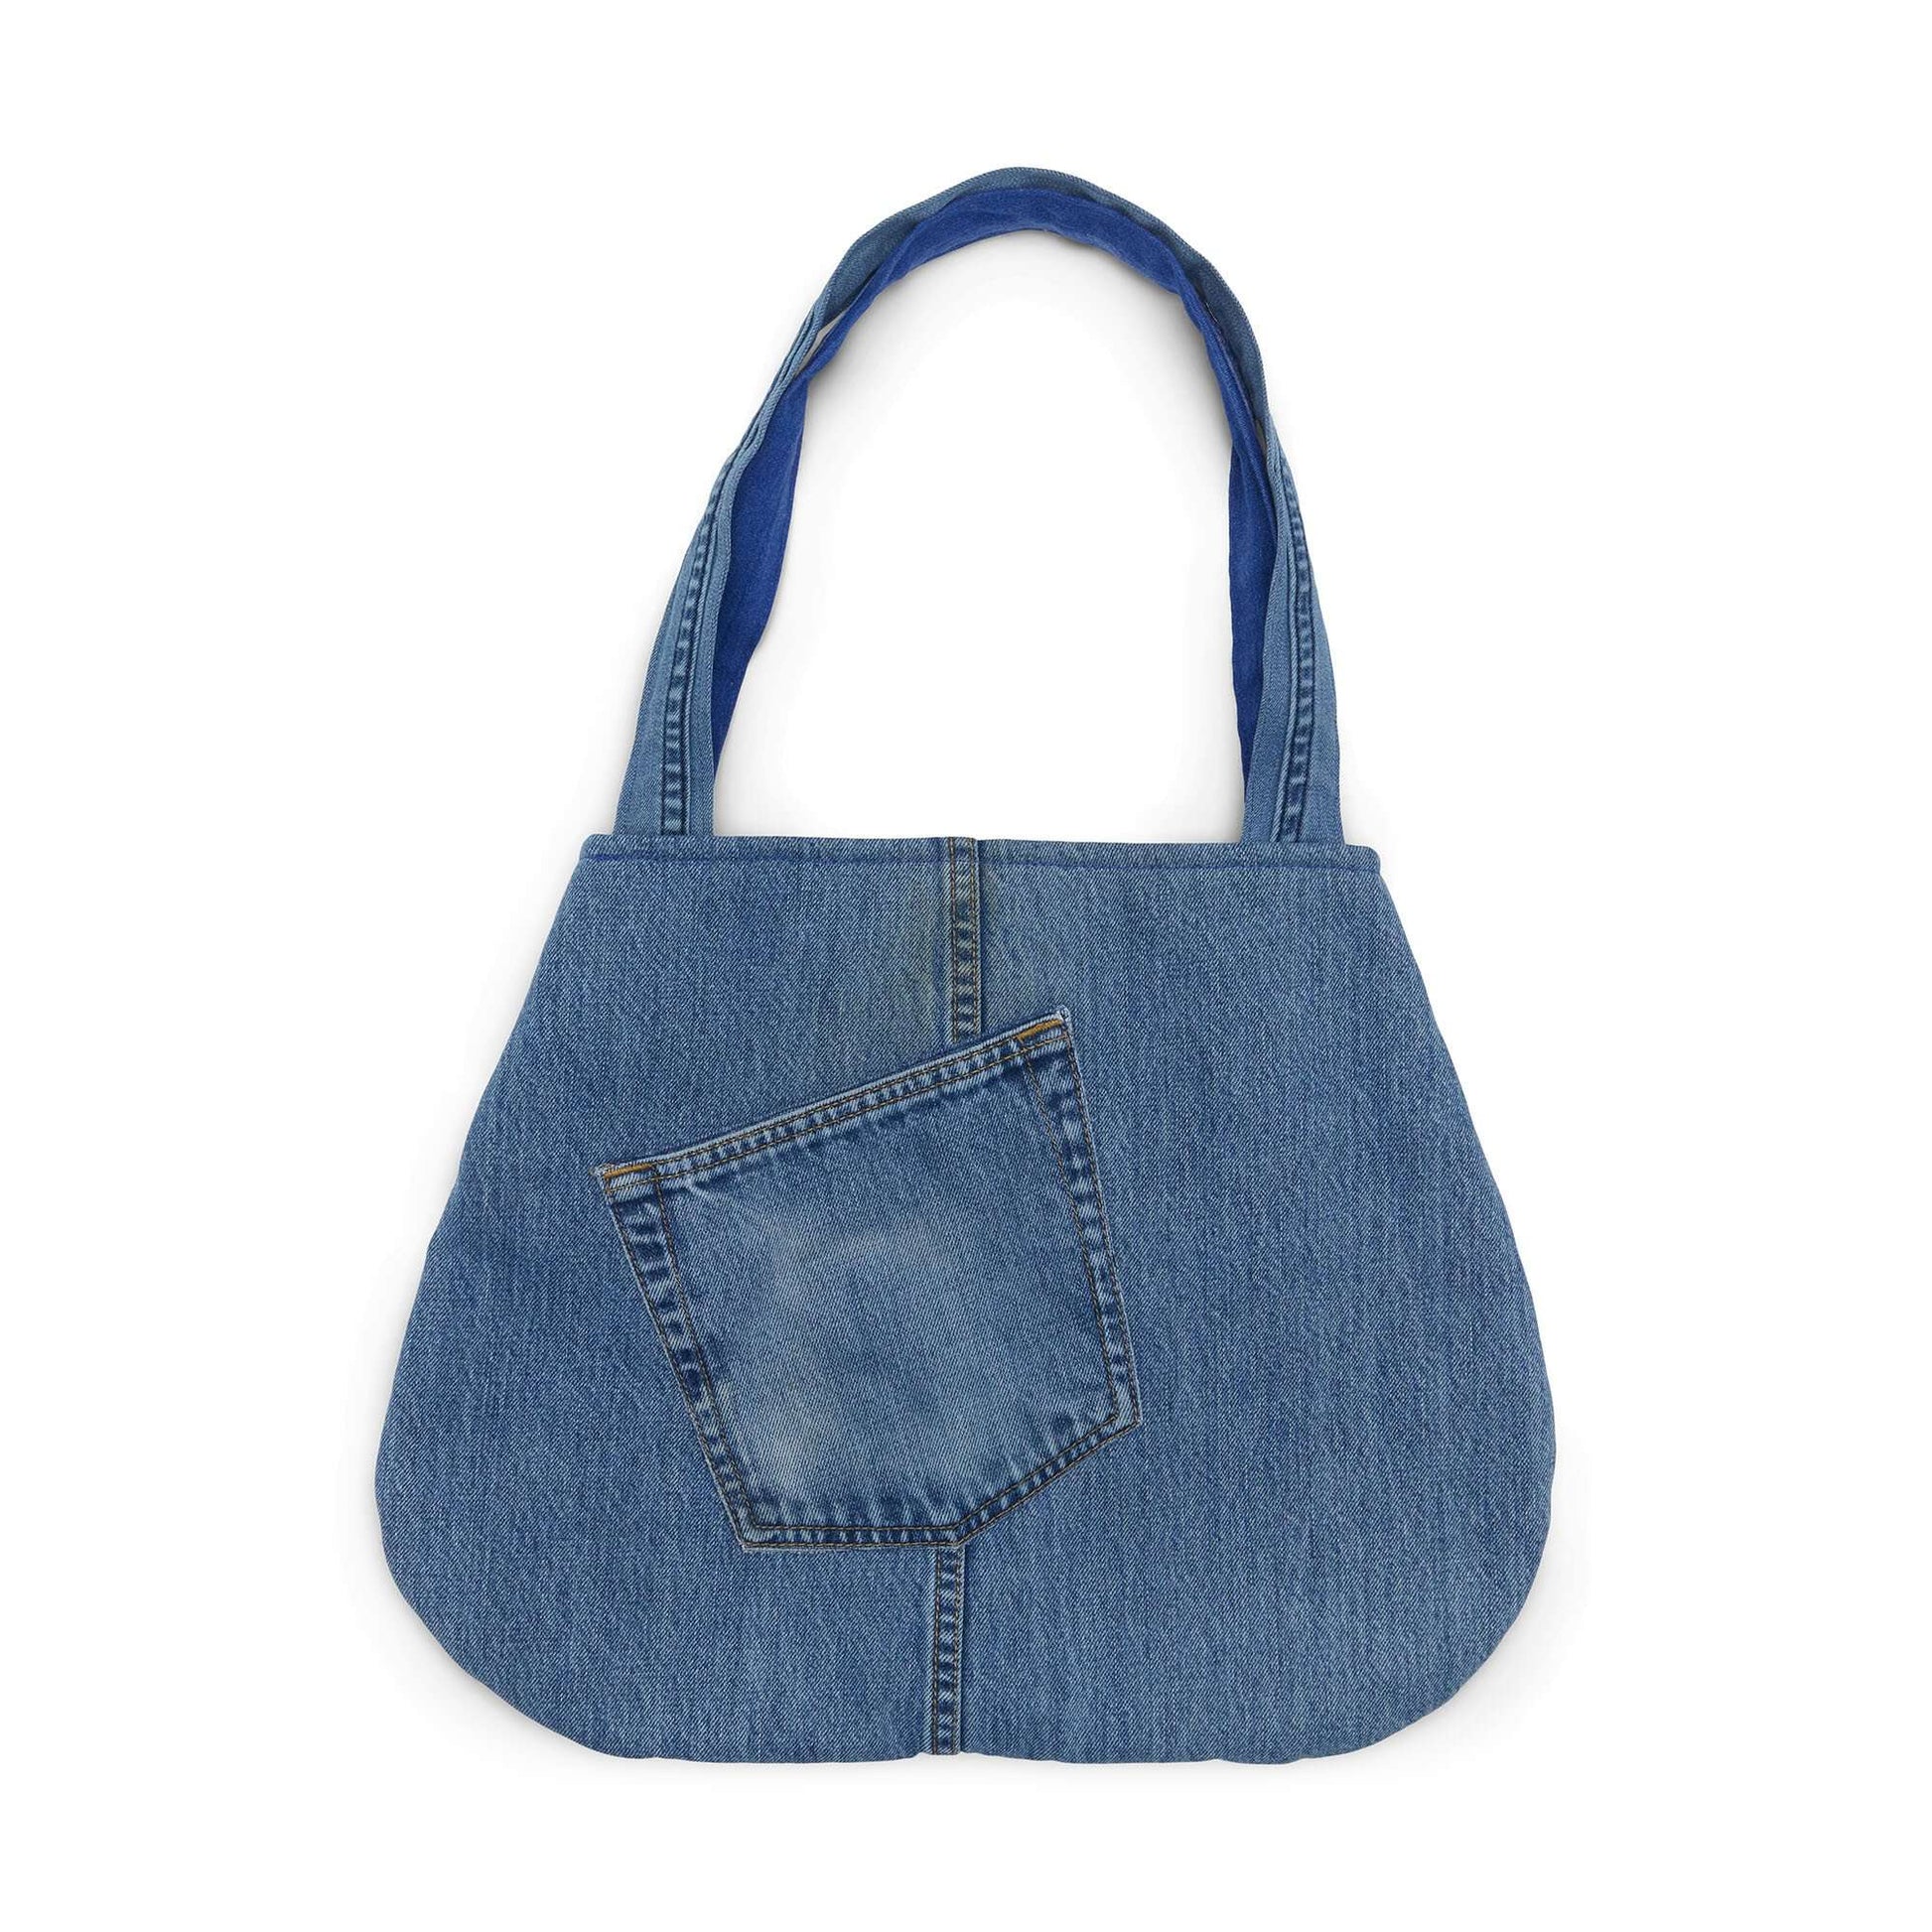 Free Coats & Clark Denim Blues Bag Sewing Pattern